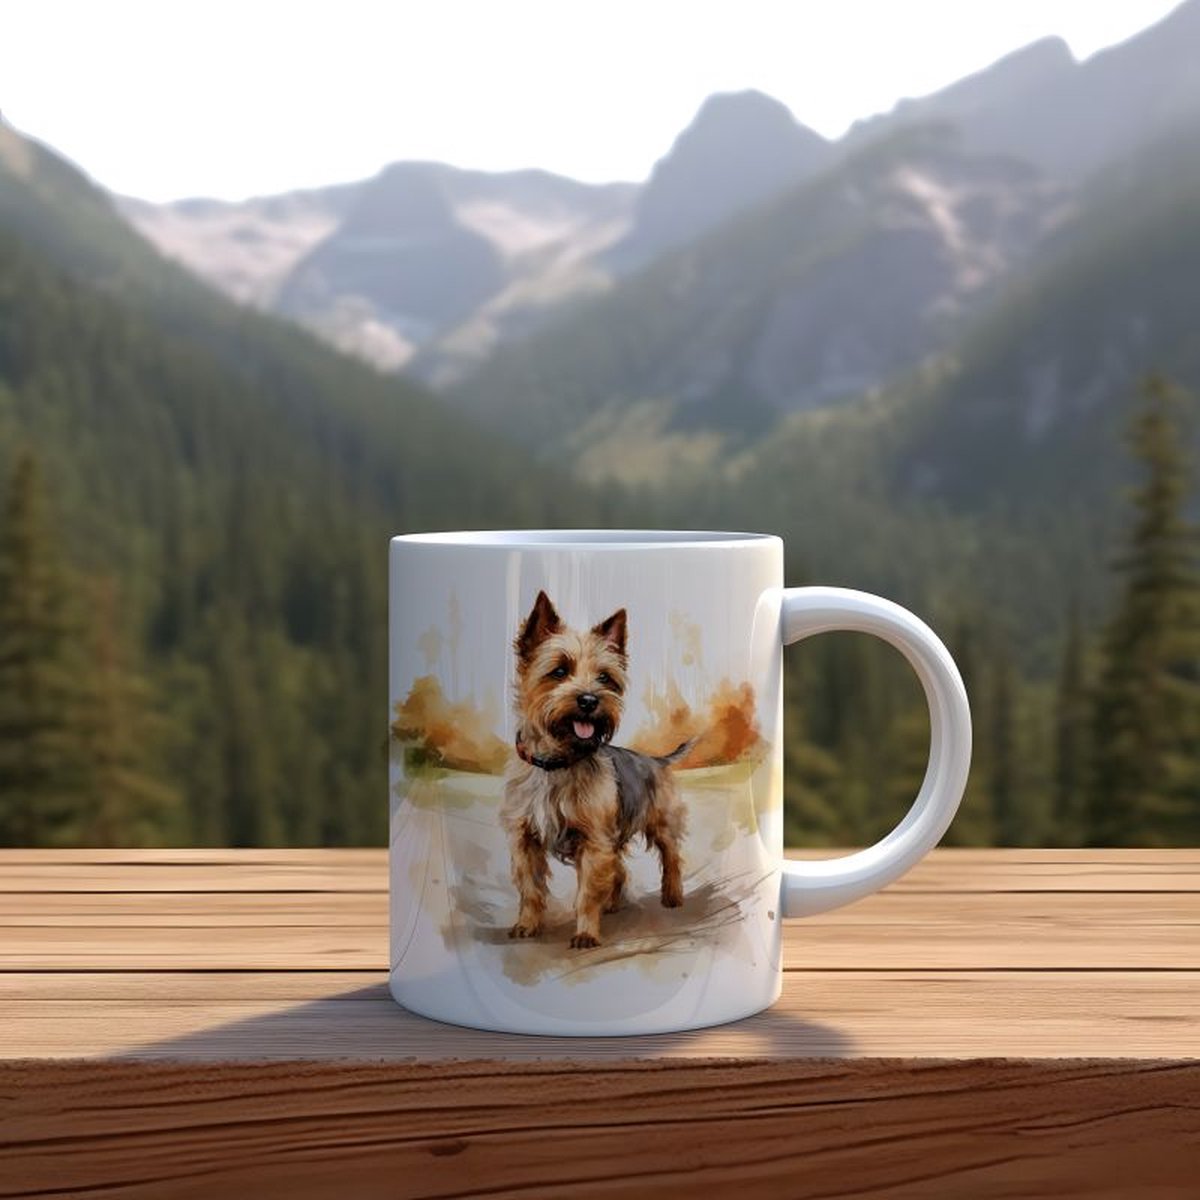 Mok Airdale Terrier Beker cadeau voor haar of hem, kerst, verjaardag, honden liefhebber, zus, broer, vriendin, vriend, collega, moeder, vader, hond